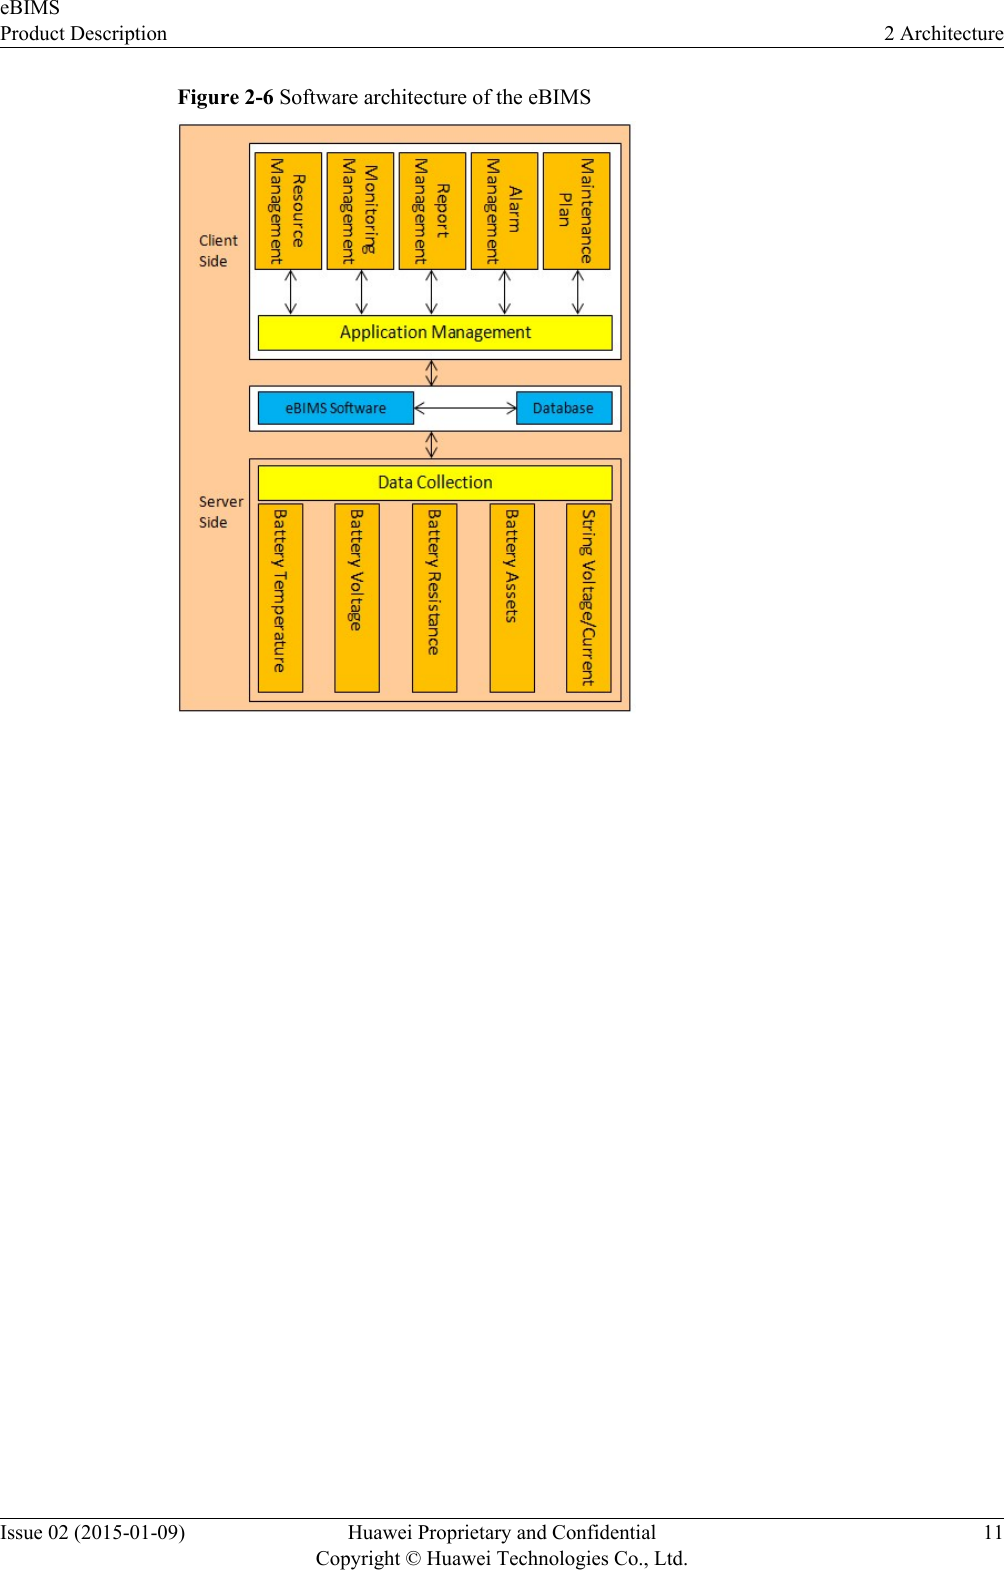 Figure 2-6 Software architecture of the eBIMSeBIMSProduct Description 2 ArchitectureIssue 02 (2015-01-09) Huawei Proprietary and ConfidentialCopyright © Huawei Technologies Co., Ltd.11